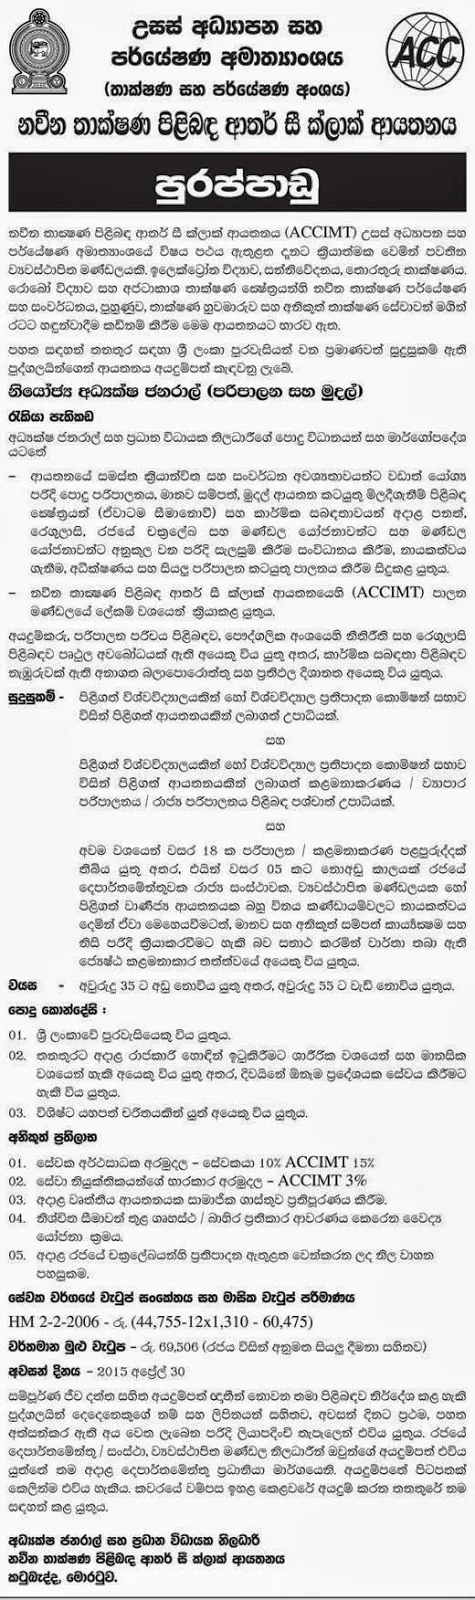 Sri Lanka Arthur C Clarke Center Vacancies